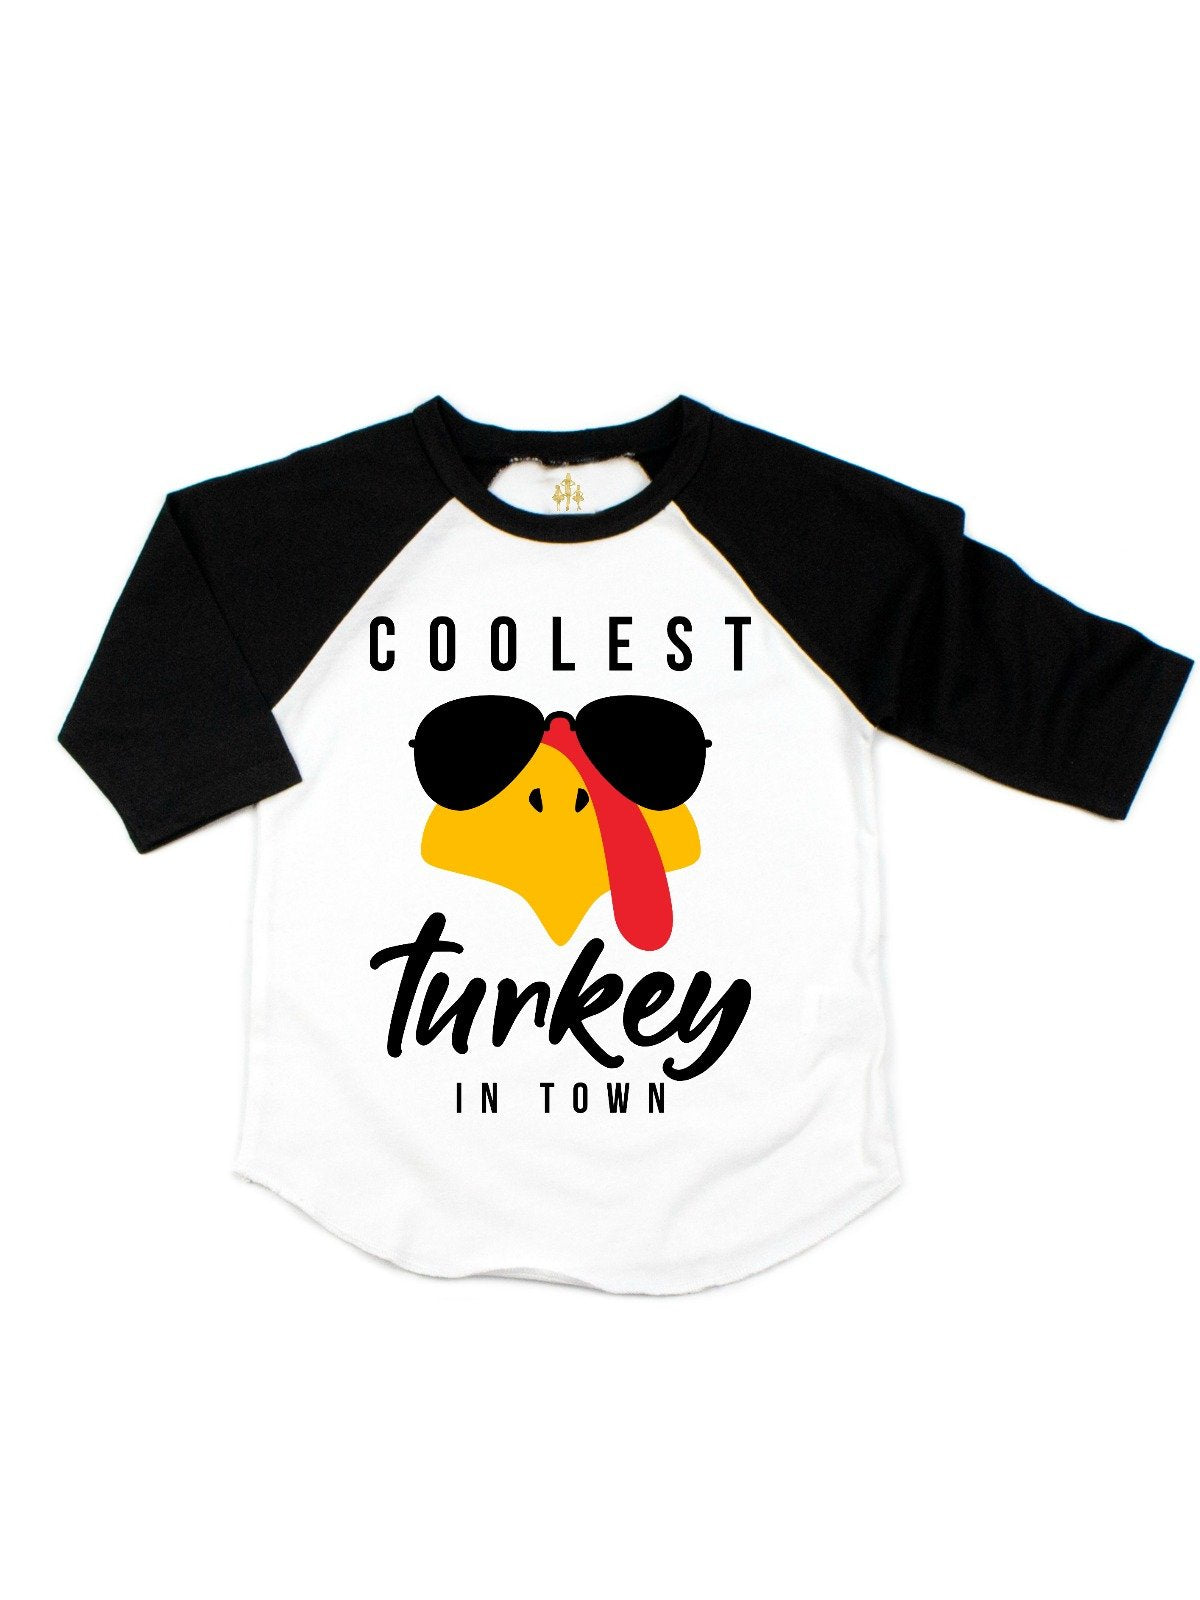 Coolest Turkey in Town Kids Thanksgiving Shirt